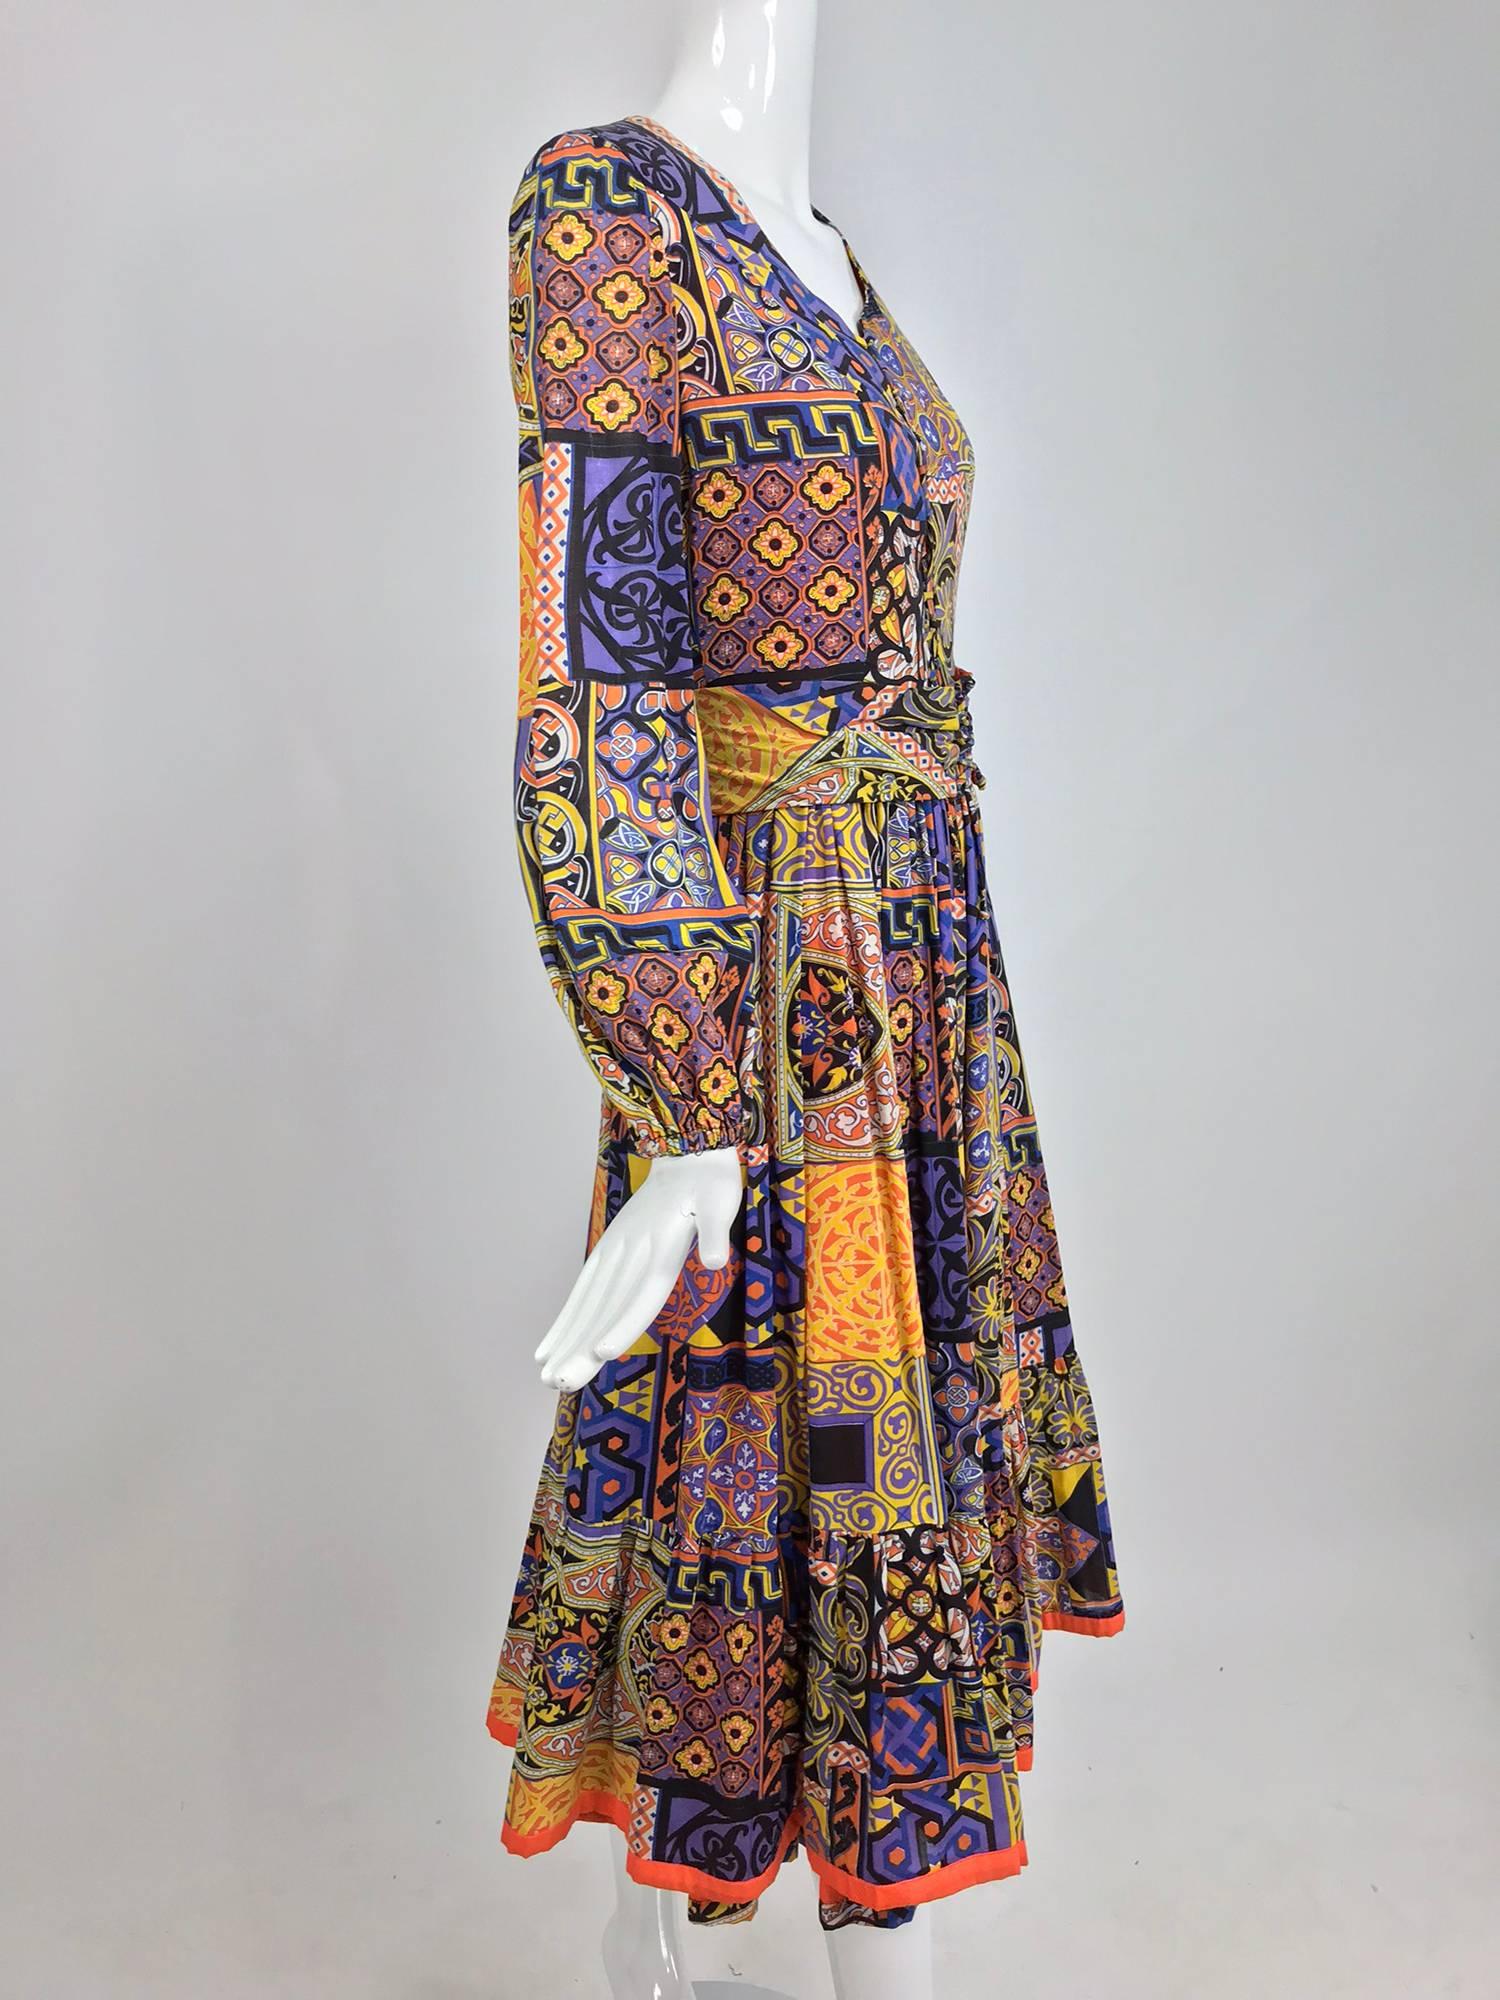 Moorish mosaic cotton print laced front bohemian dress 1960s 10